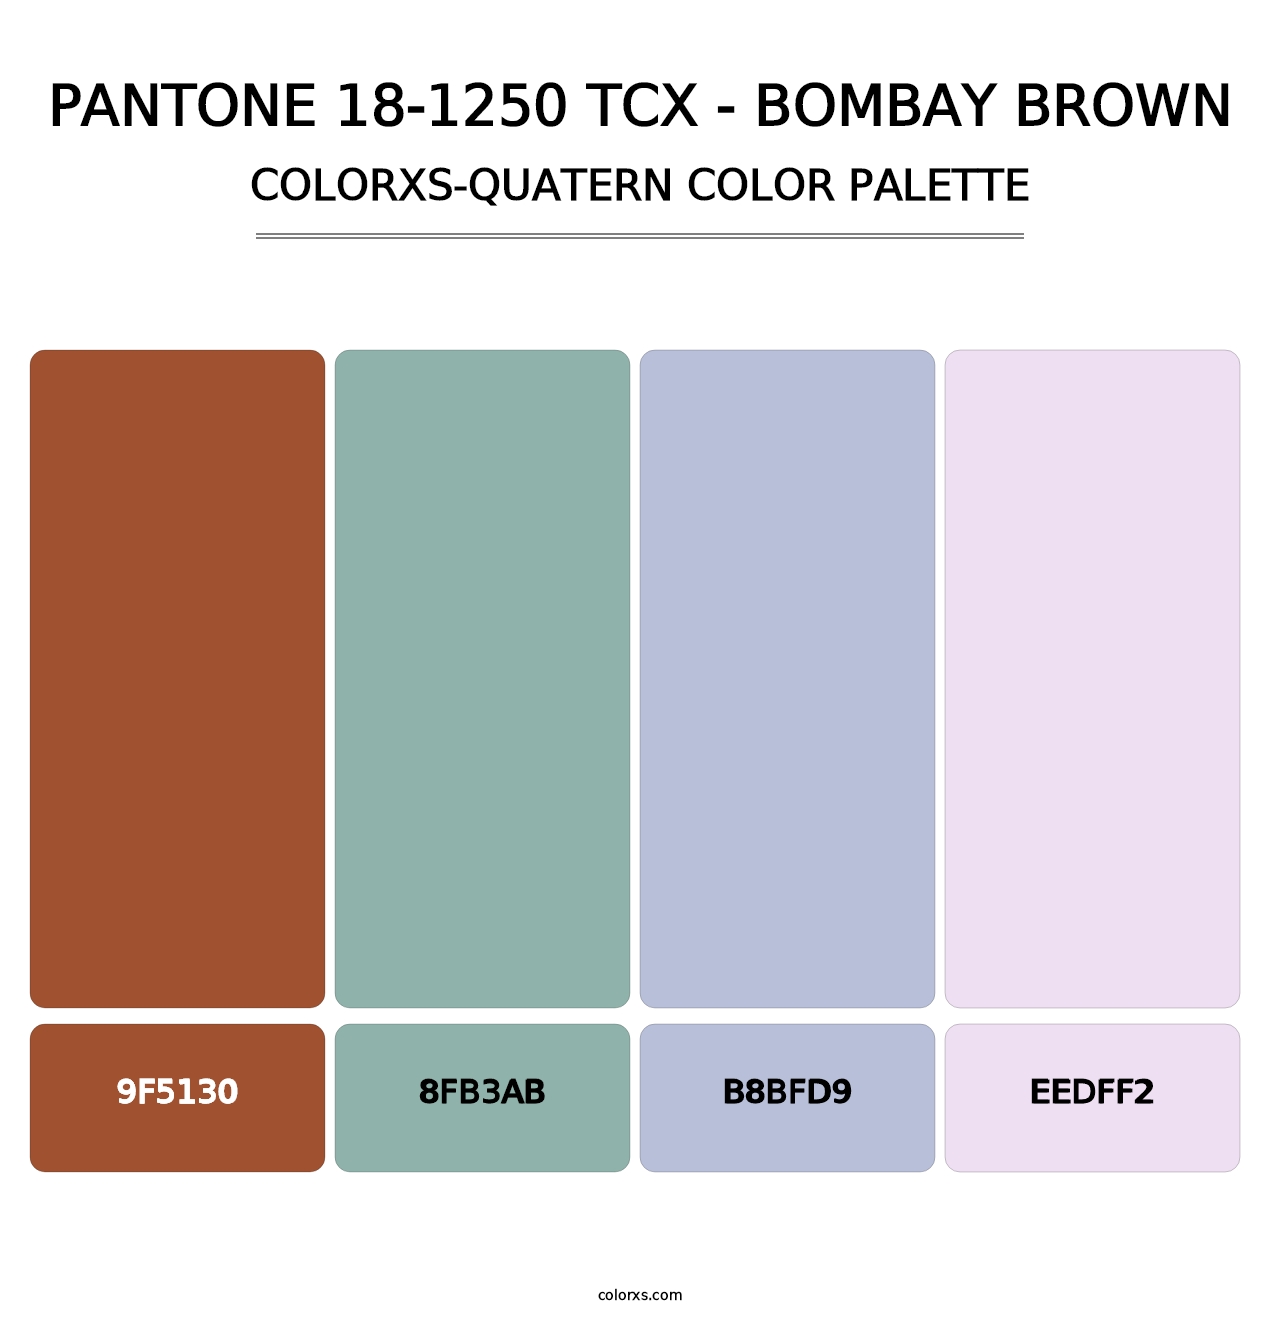 PANTONE 18-1250 TCX - Bombay Brown - Colorxs Quatern Palette